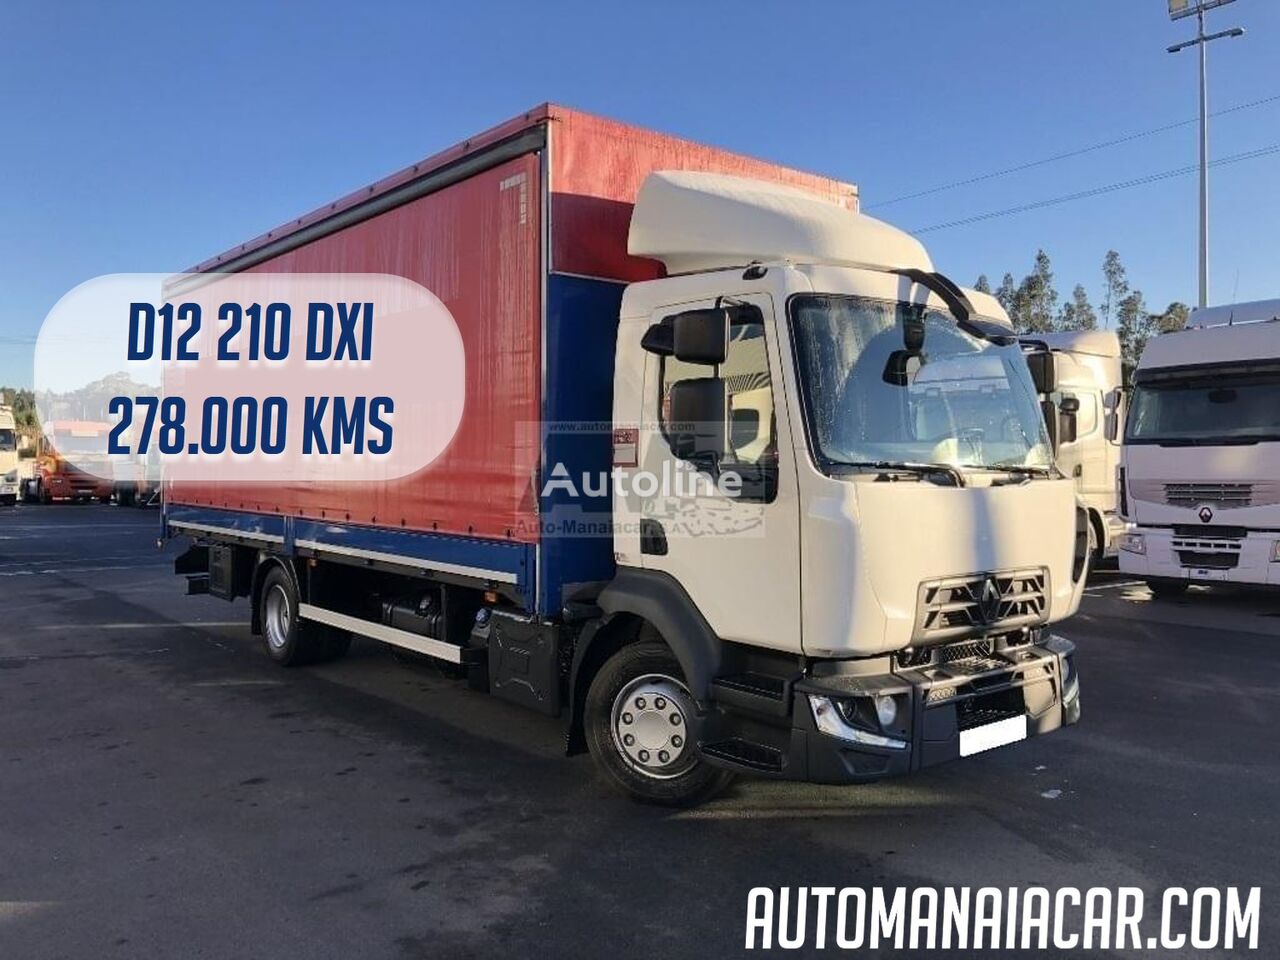 camion telonato Renault D12 210 DXI EURO6 278.000 KMS